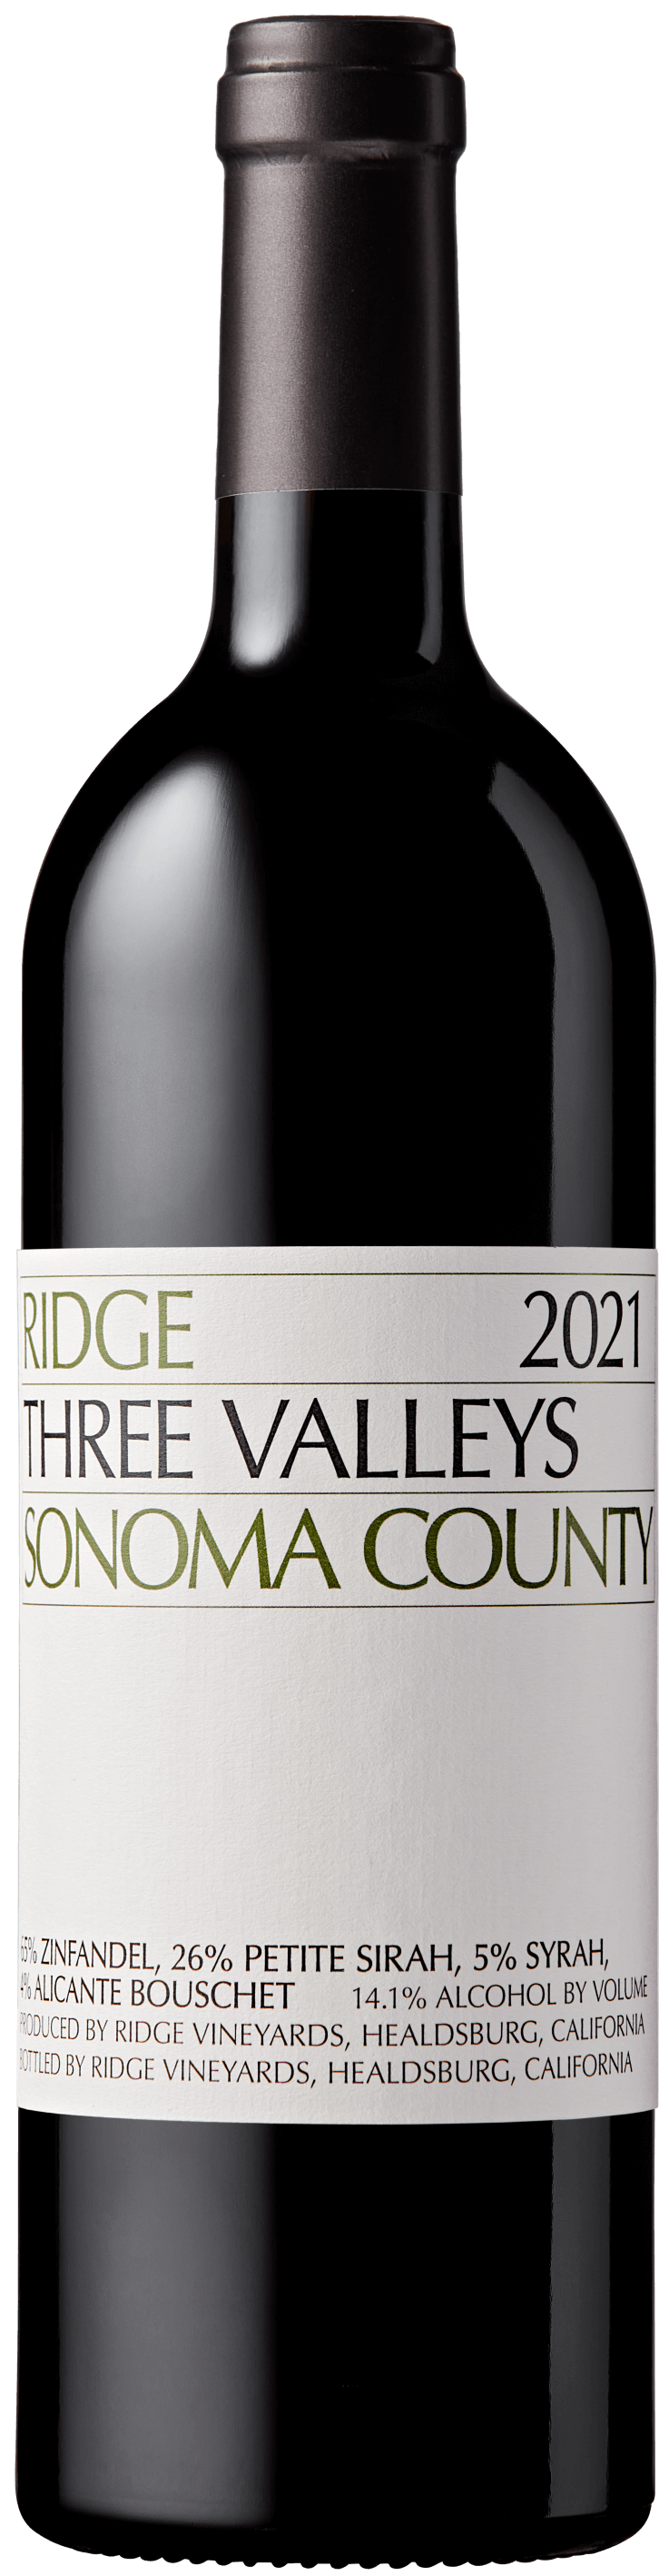 Ridge Vineyards Three Valleys Sonoma County Red 2021 750ml